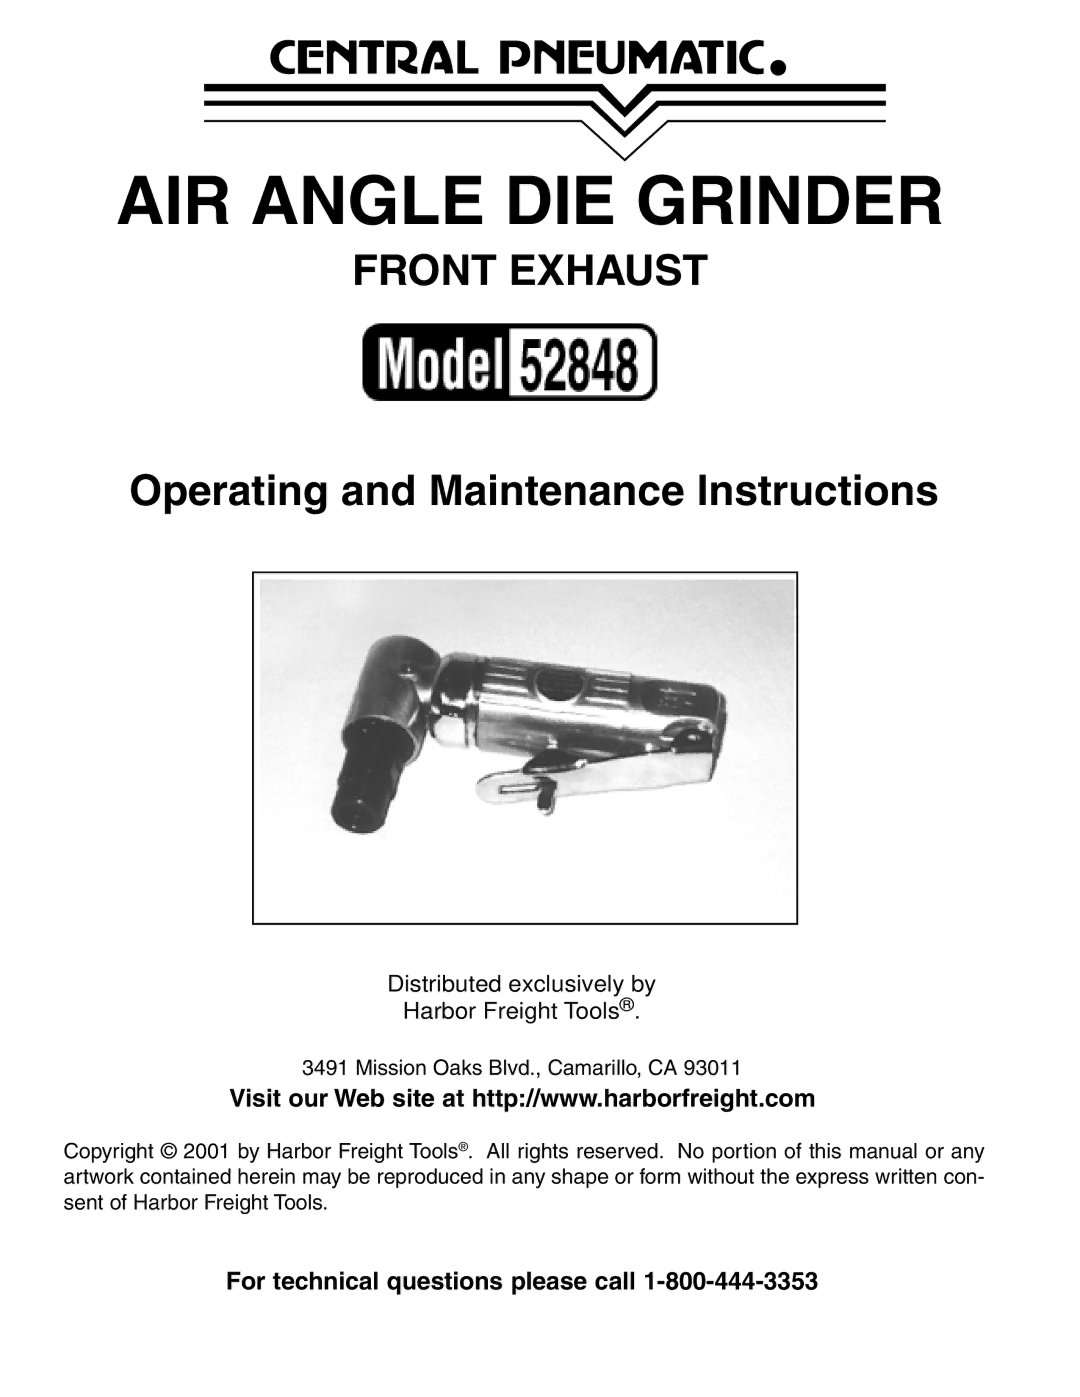 Harbor Freight Tools 52848 manual AIR Angle DIE Grinder 